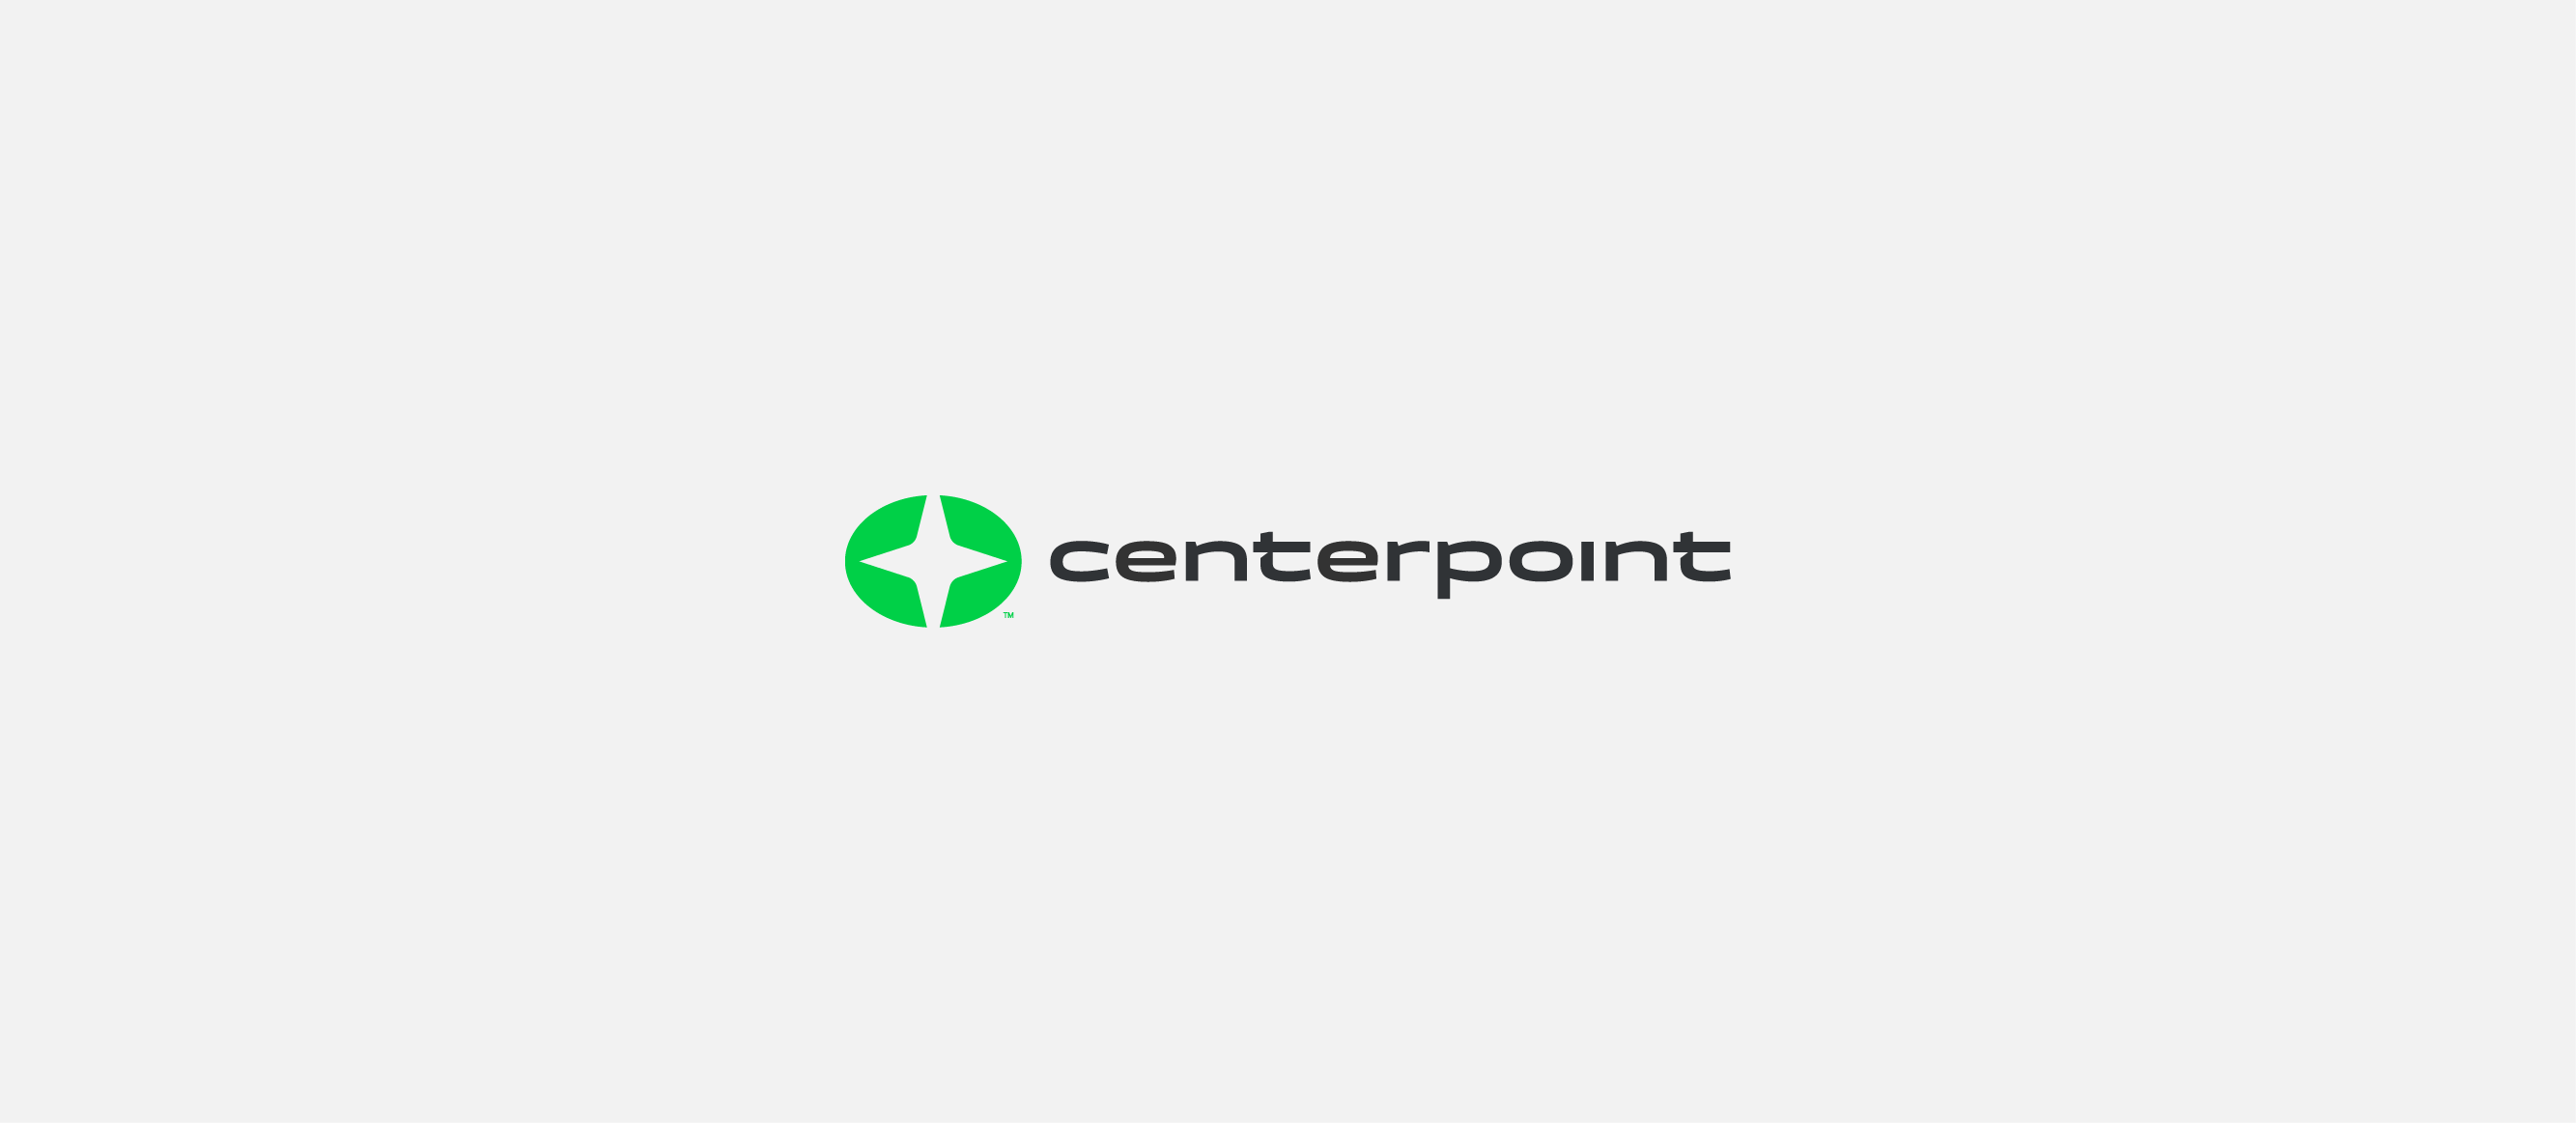 centerpoint brand identity design visual direction